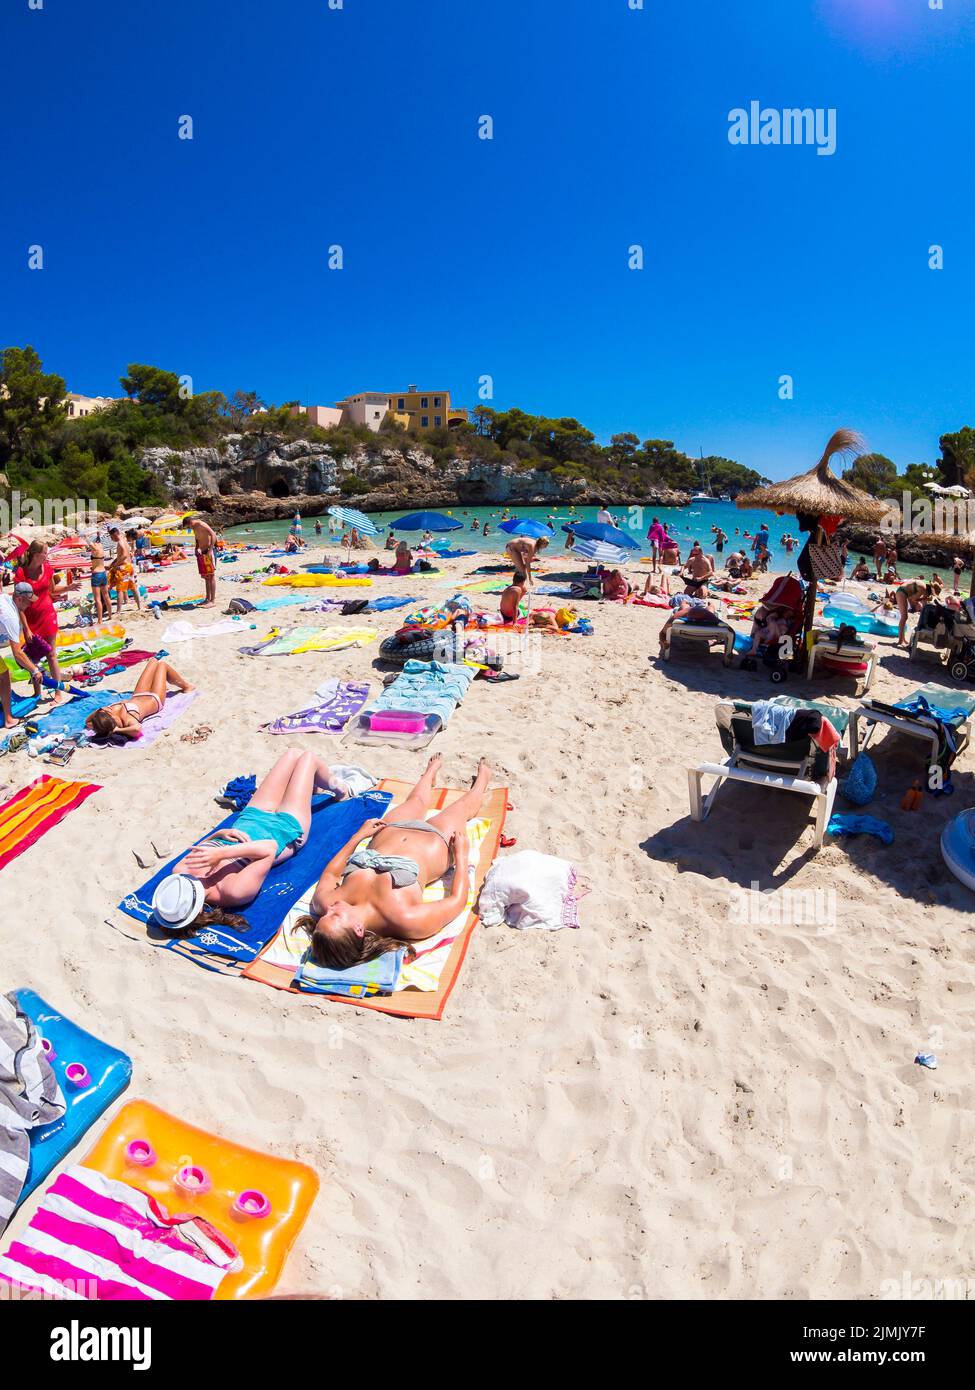 La plage animée de Cala Ferrera Banque D'Images